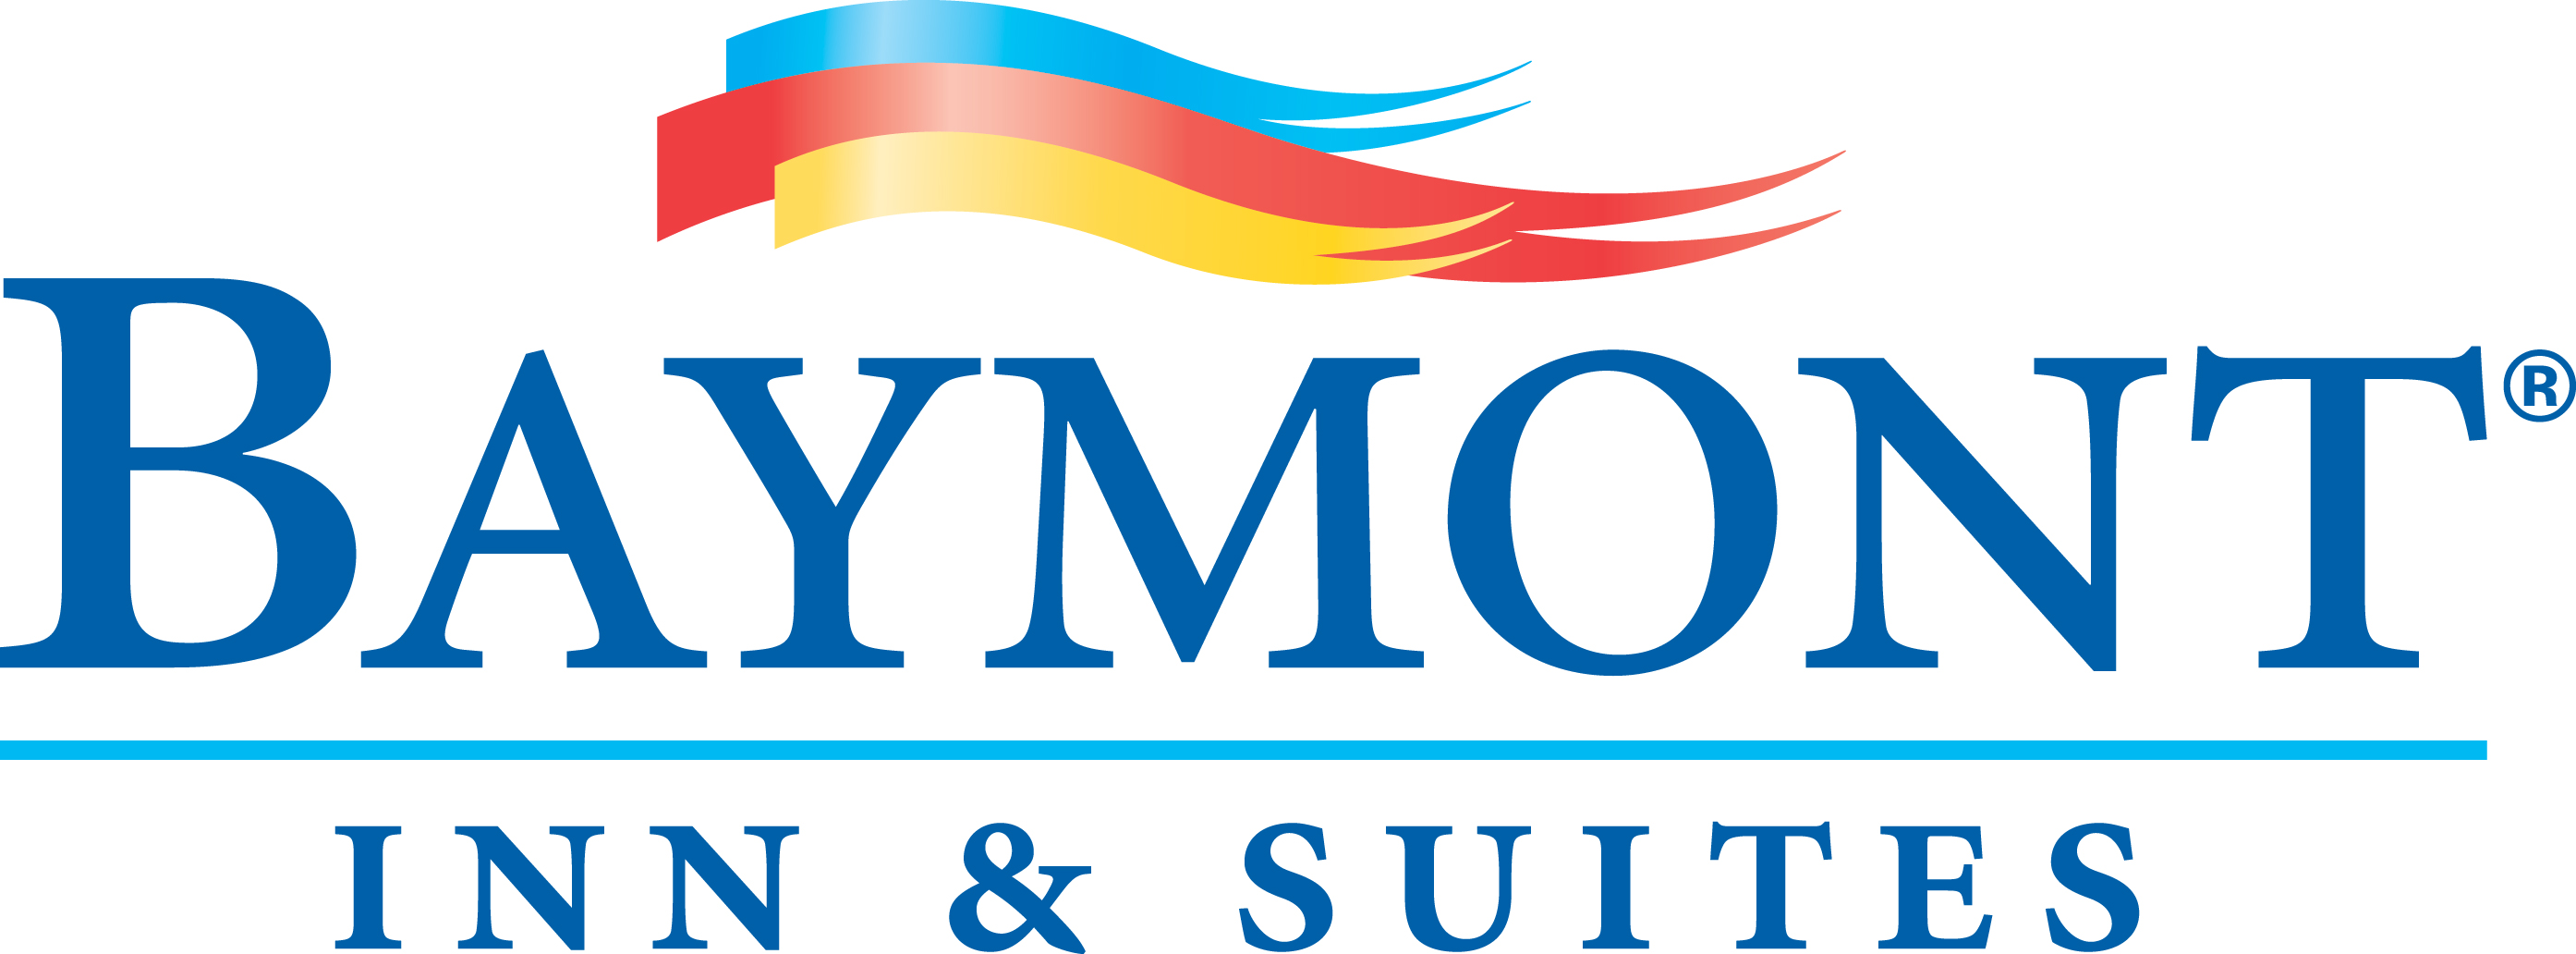 Baymont Brand Logo